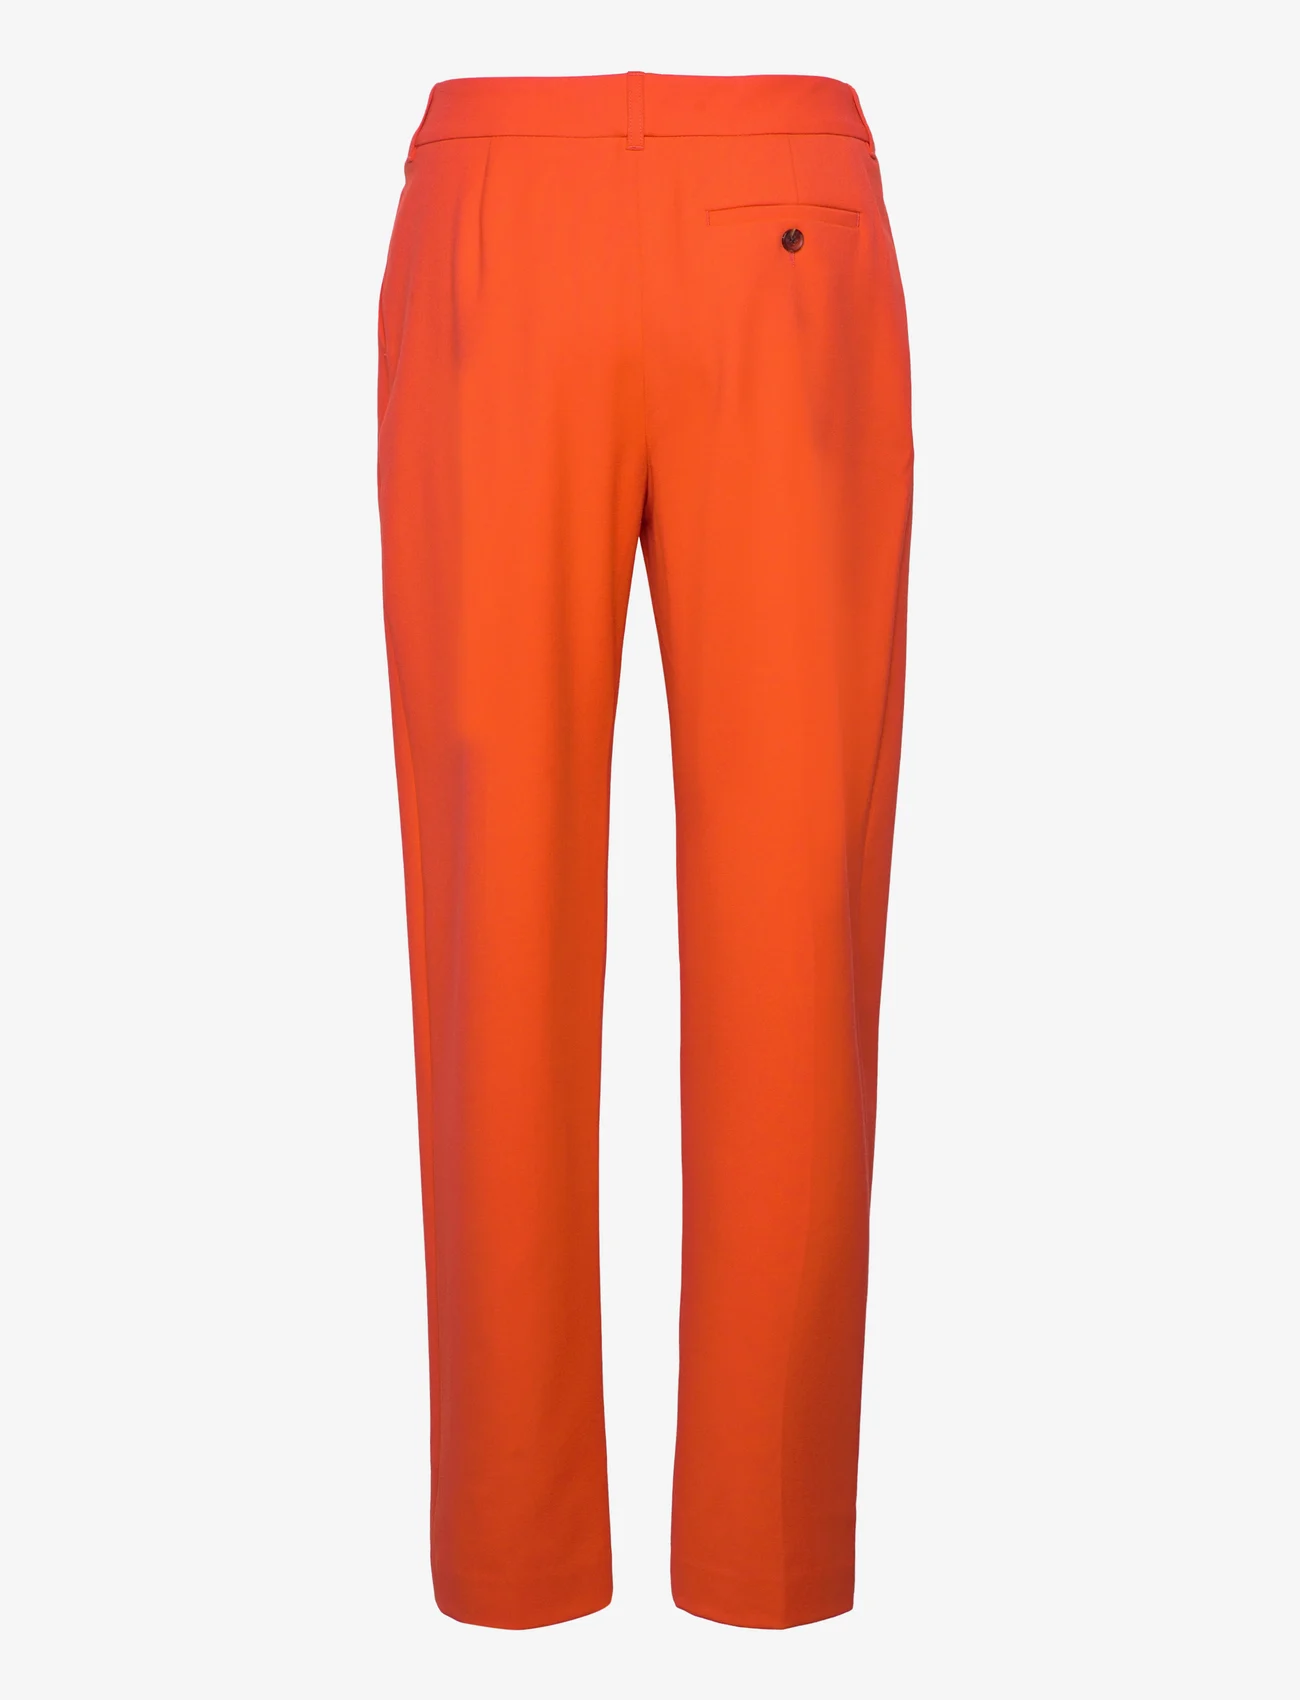 Samsøe Samsøe - Meme Trousers 13103 - tailored trousers - orange.com - 1